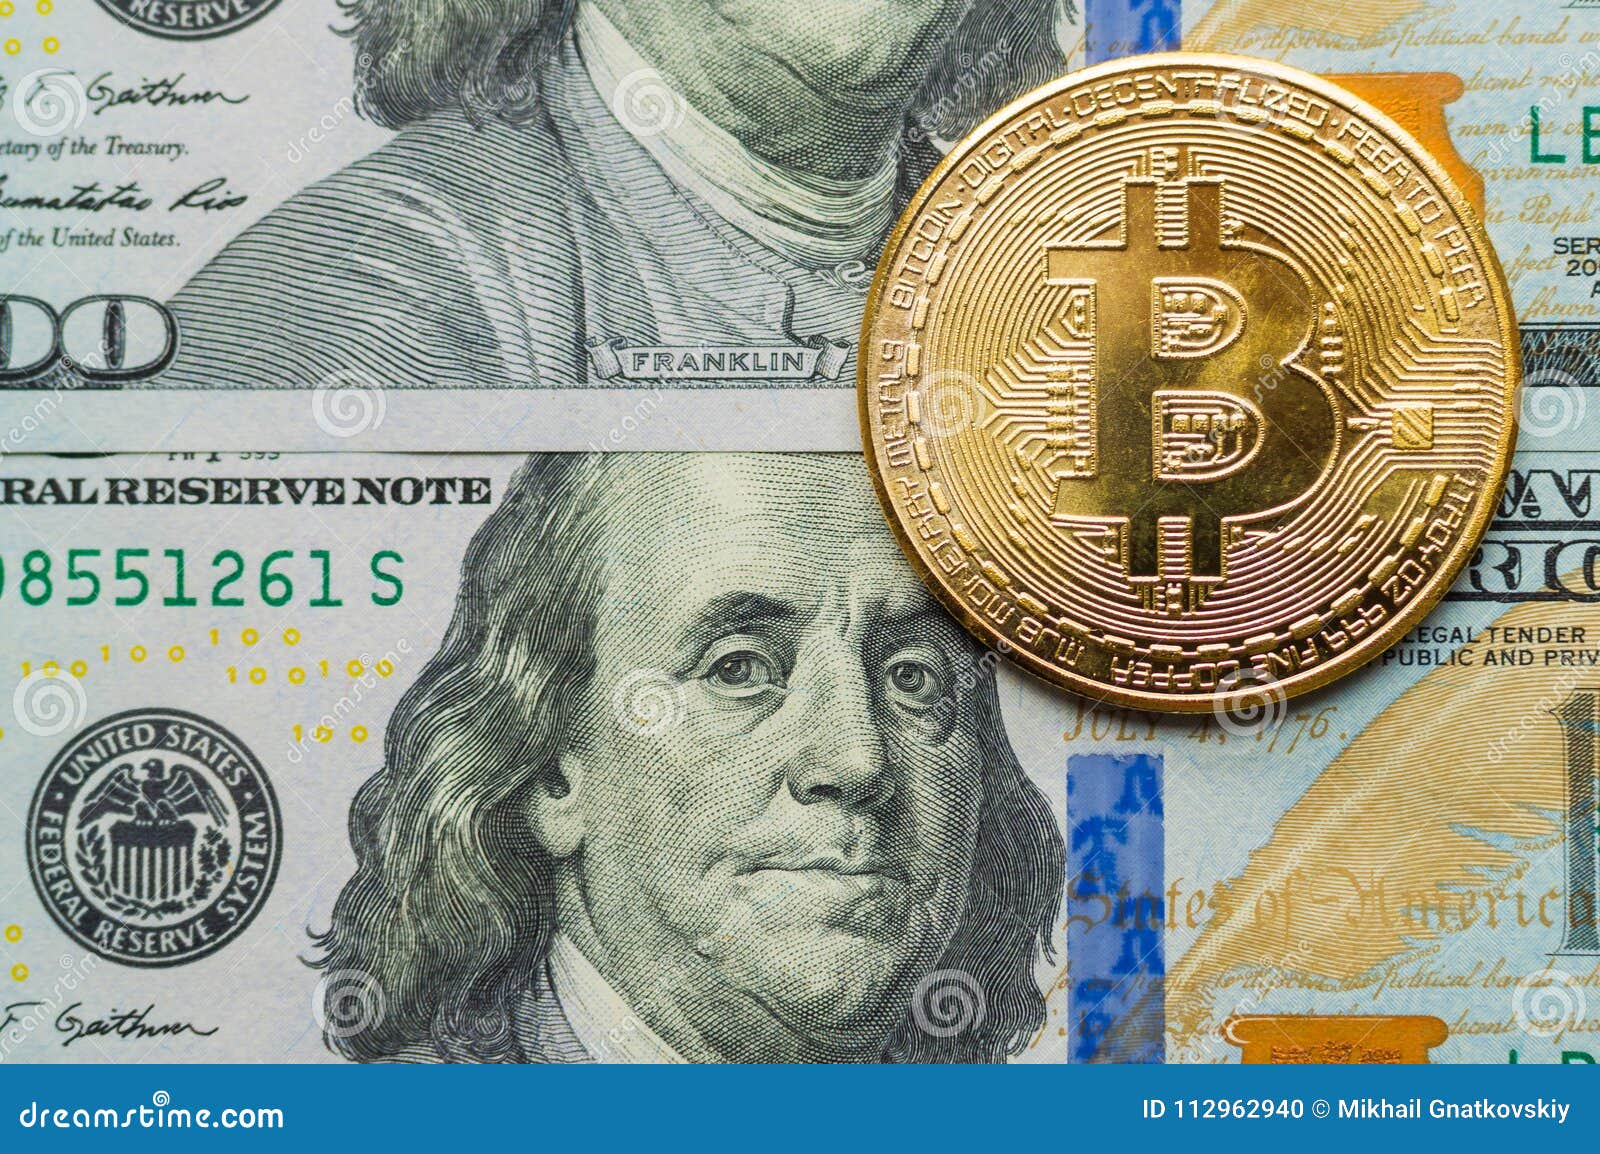 one bitcoin in dollars